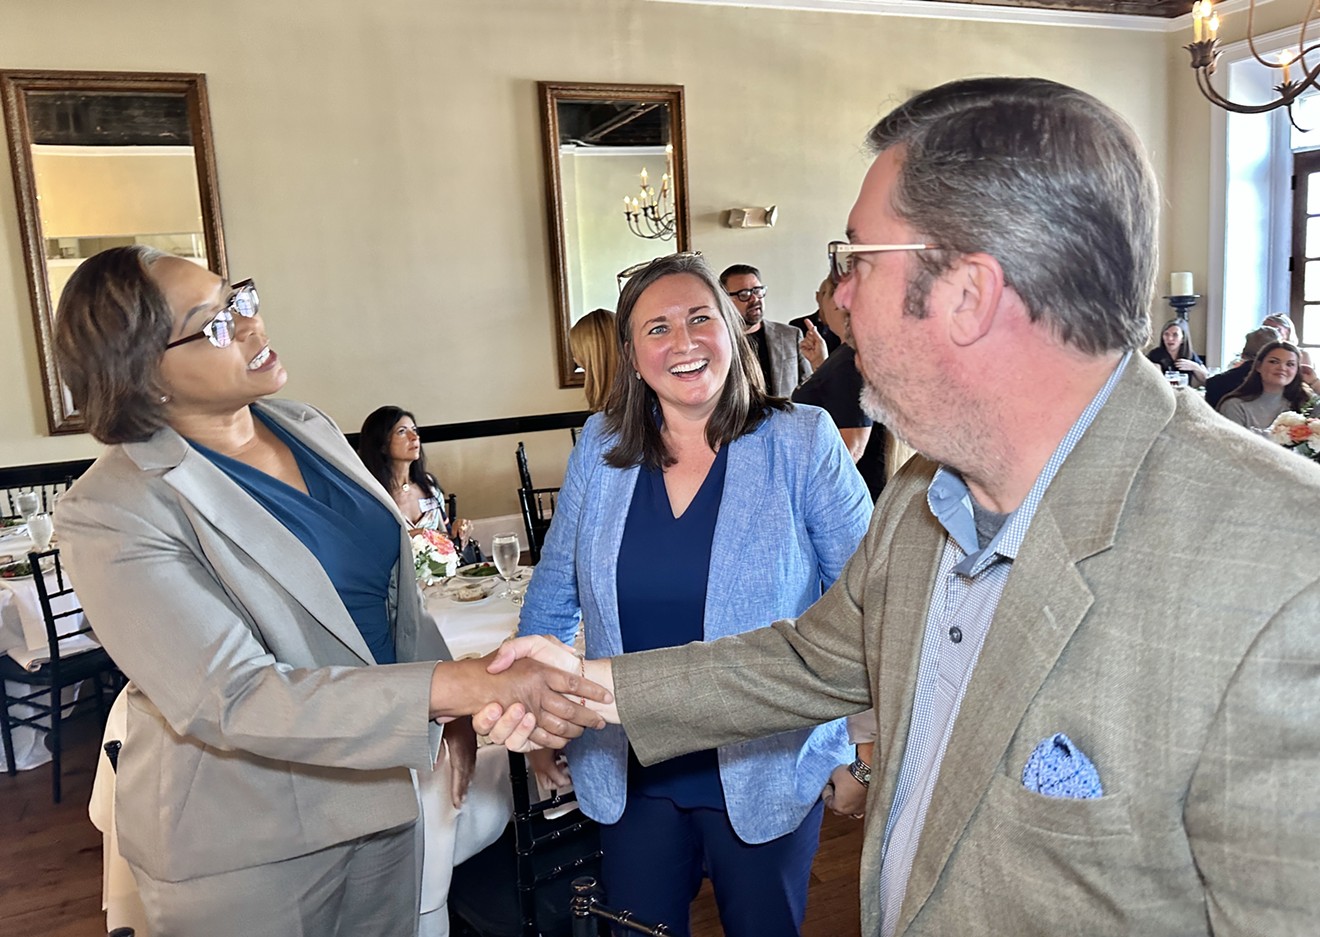 Tourism Leadership Council Welcomes Visit Savannah’s Joe Marinelli